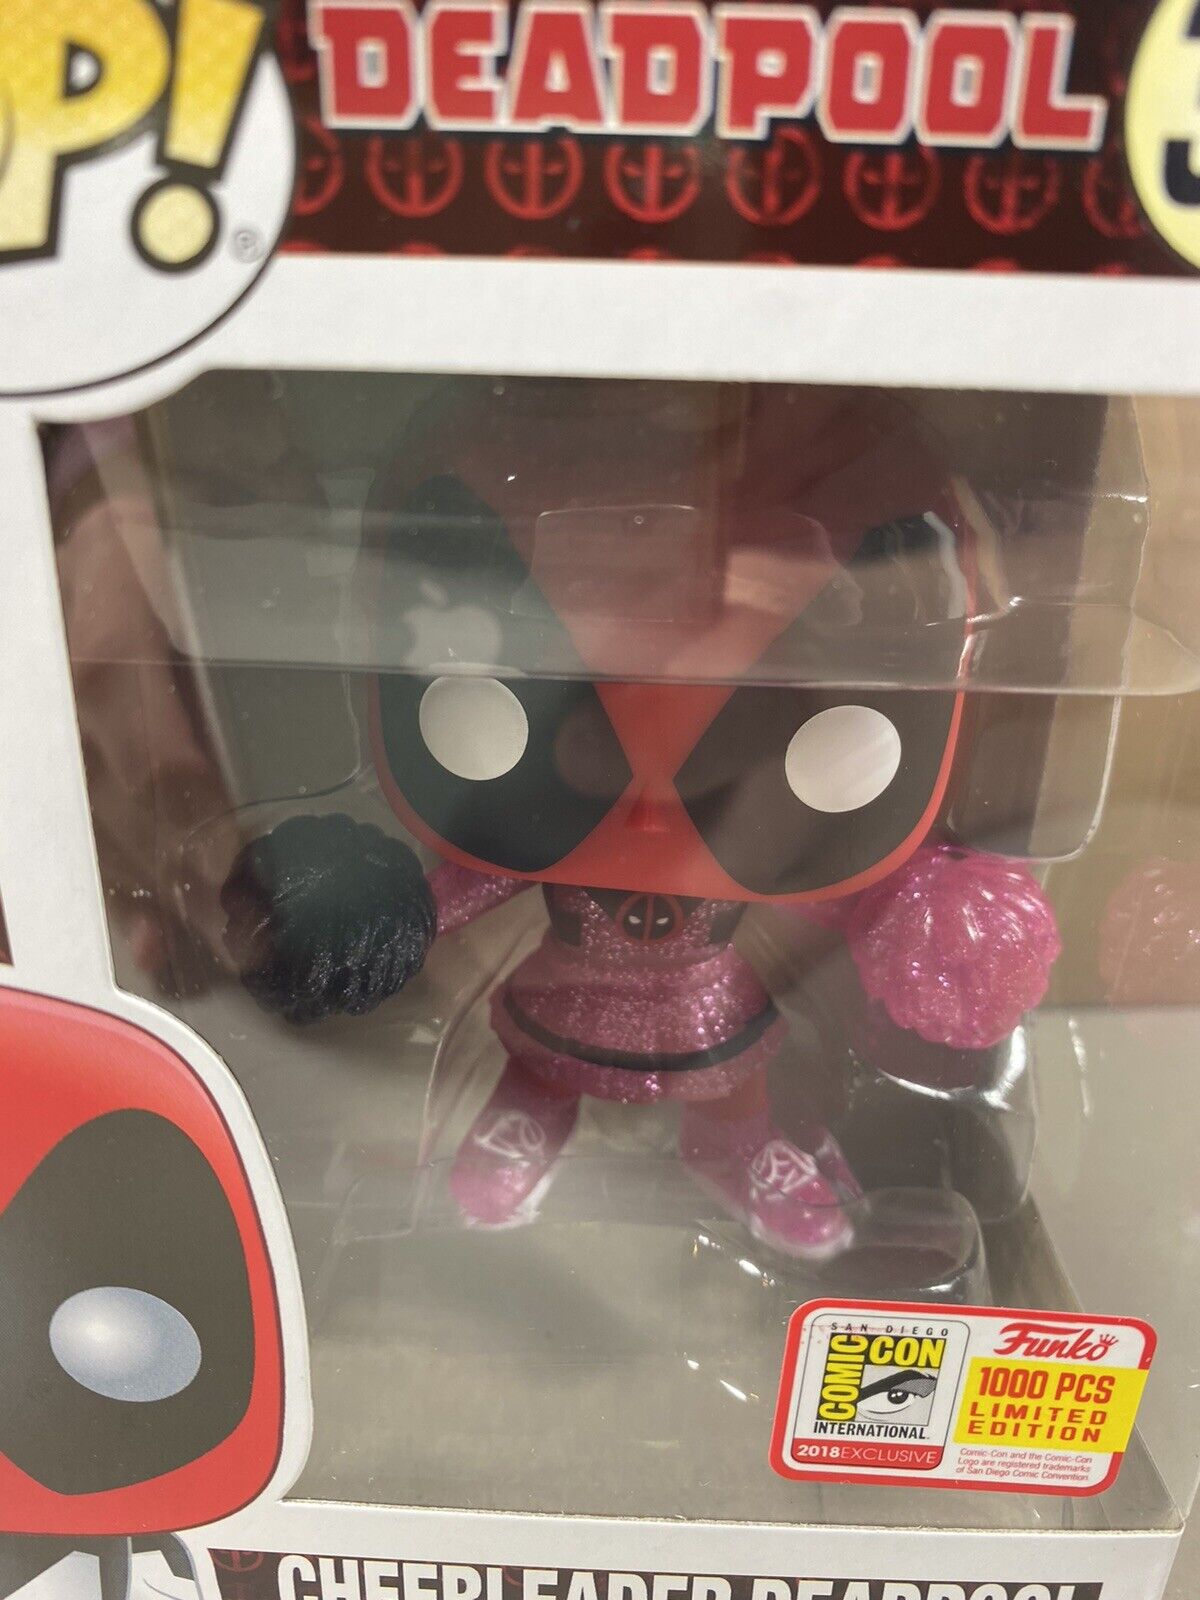 Funko Pop! Marvel Deadpool (Cheerleader) (Glitter Pink) SDCC